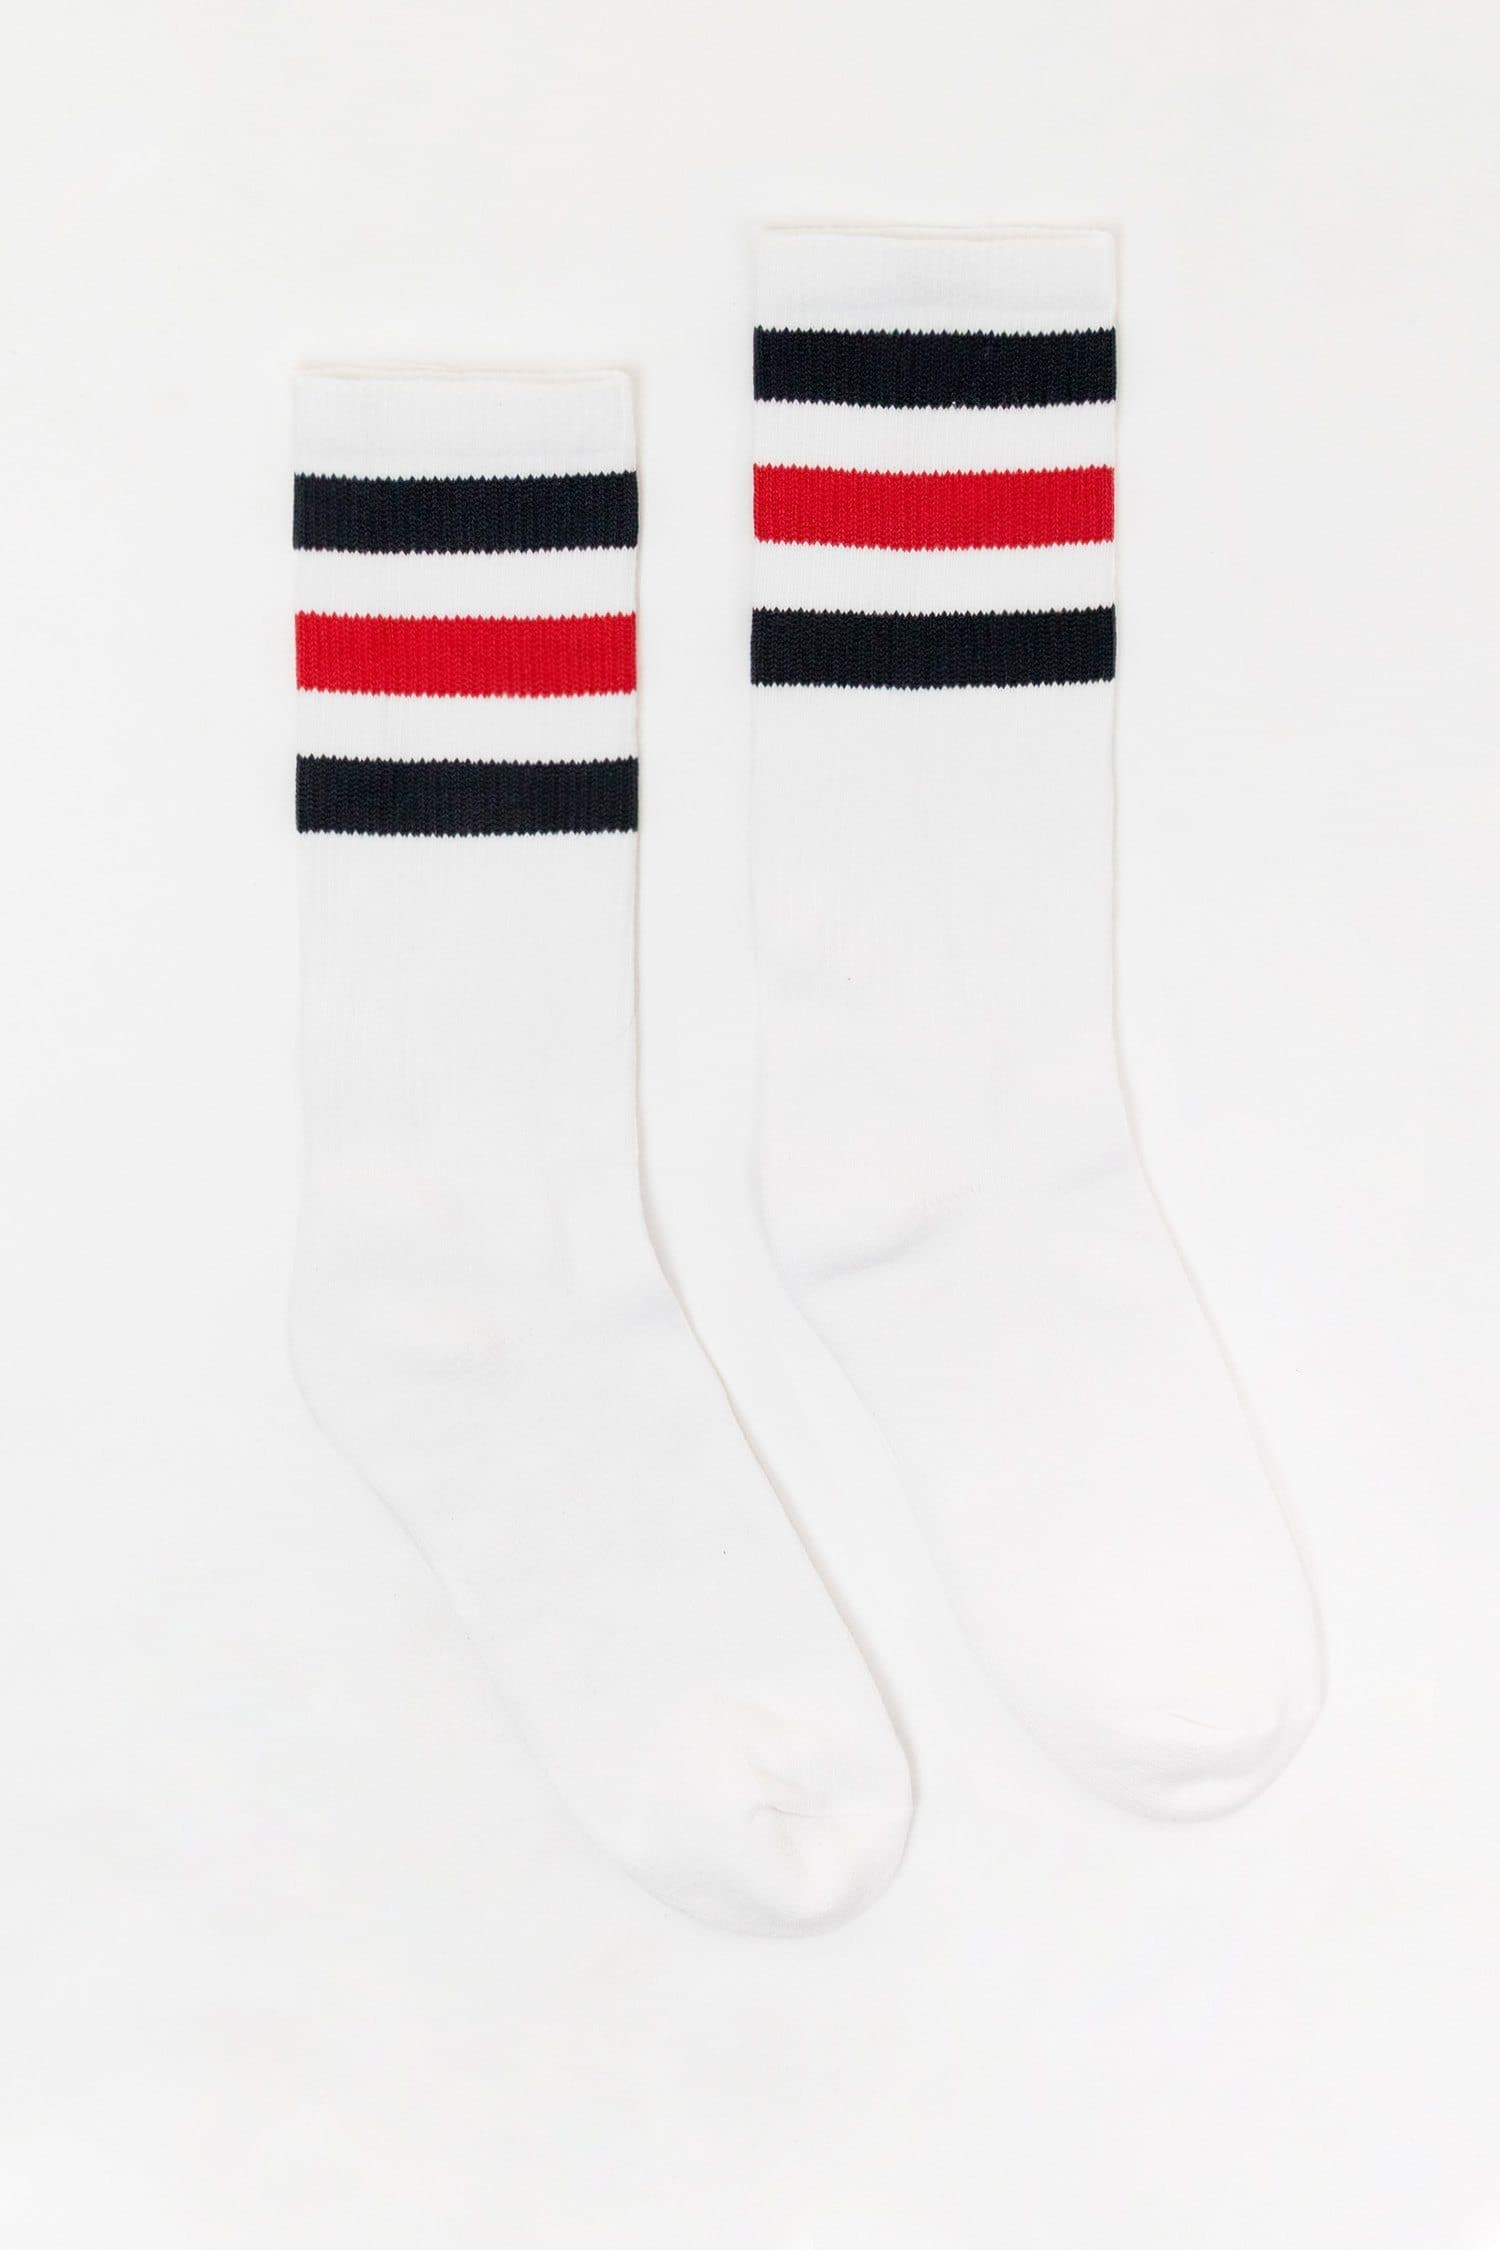 Sports Cotton Sock Calf 3 Pack - White/Black Stripe - Community Clothing